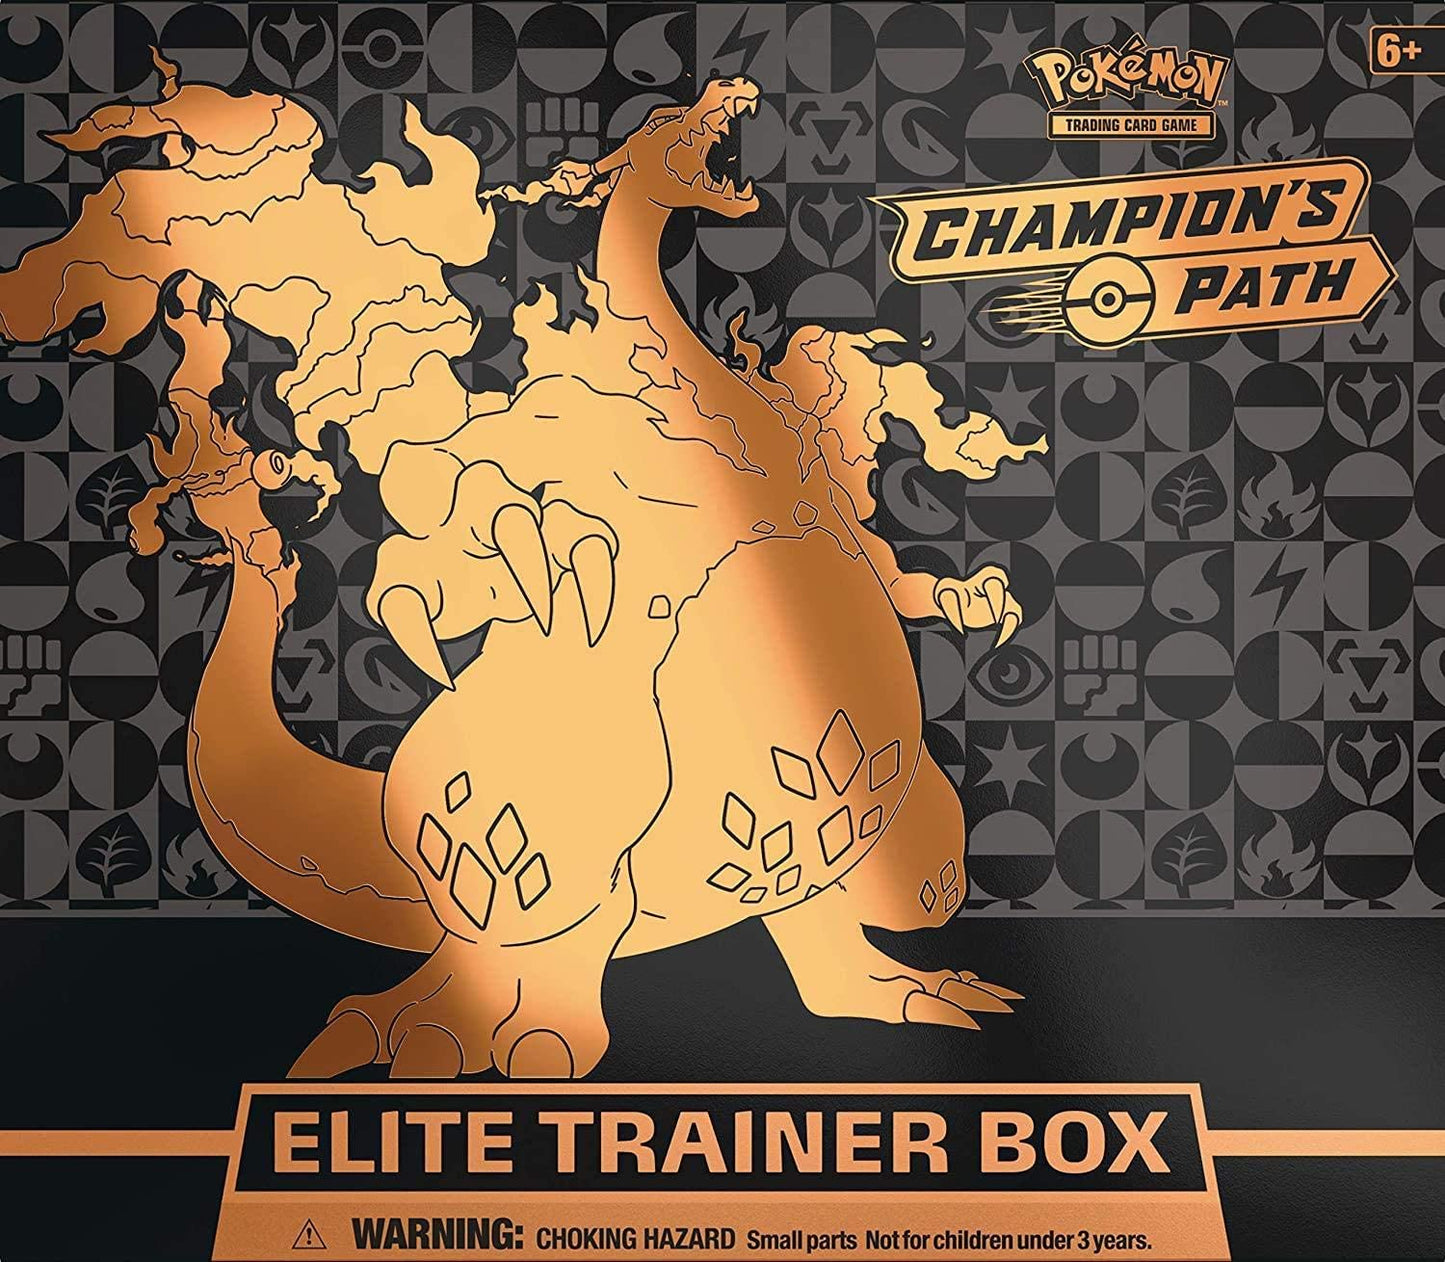 Pokemon TCG: Elite Trainer Box - Champion's Path